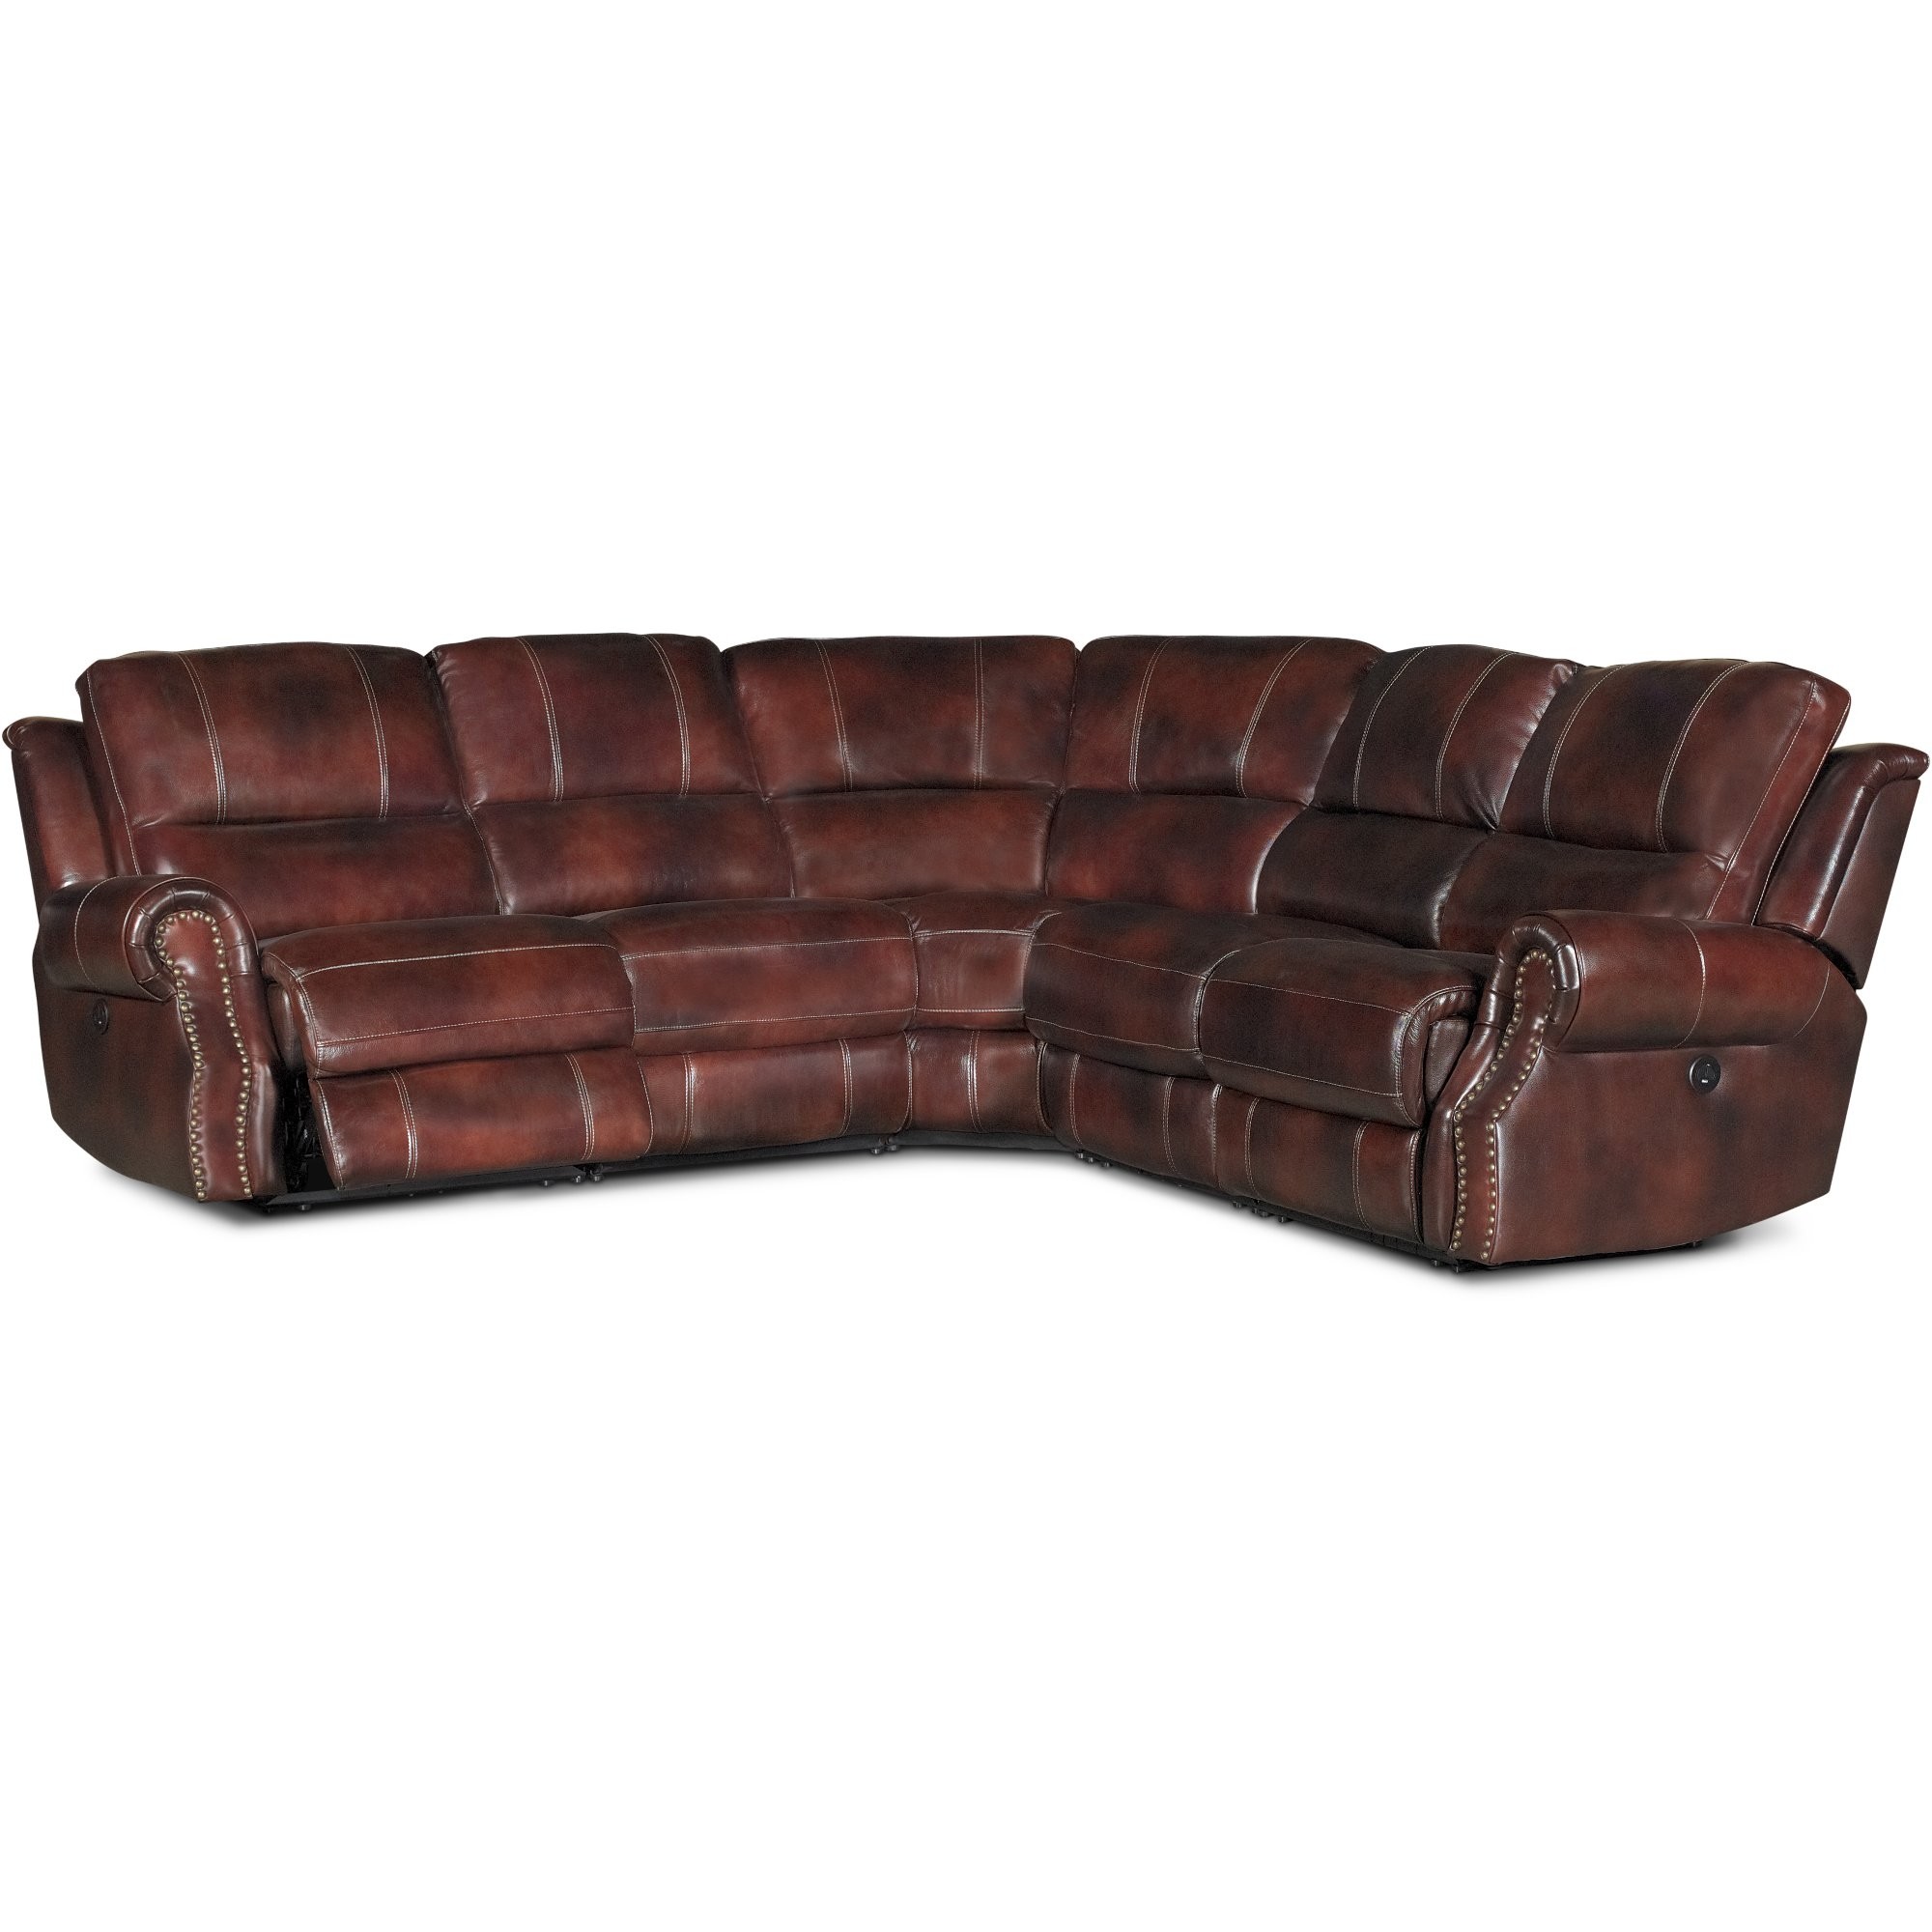 Auburn leather match 5 piece power reclining sectional